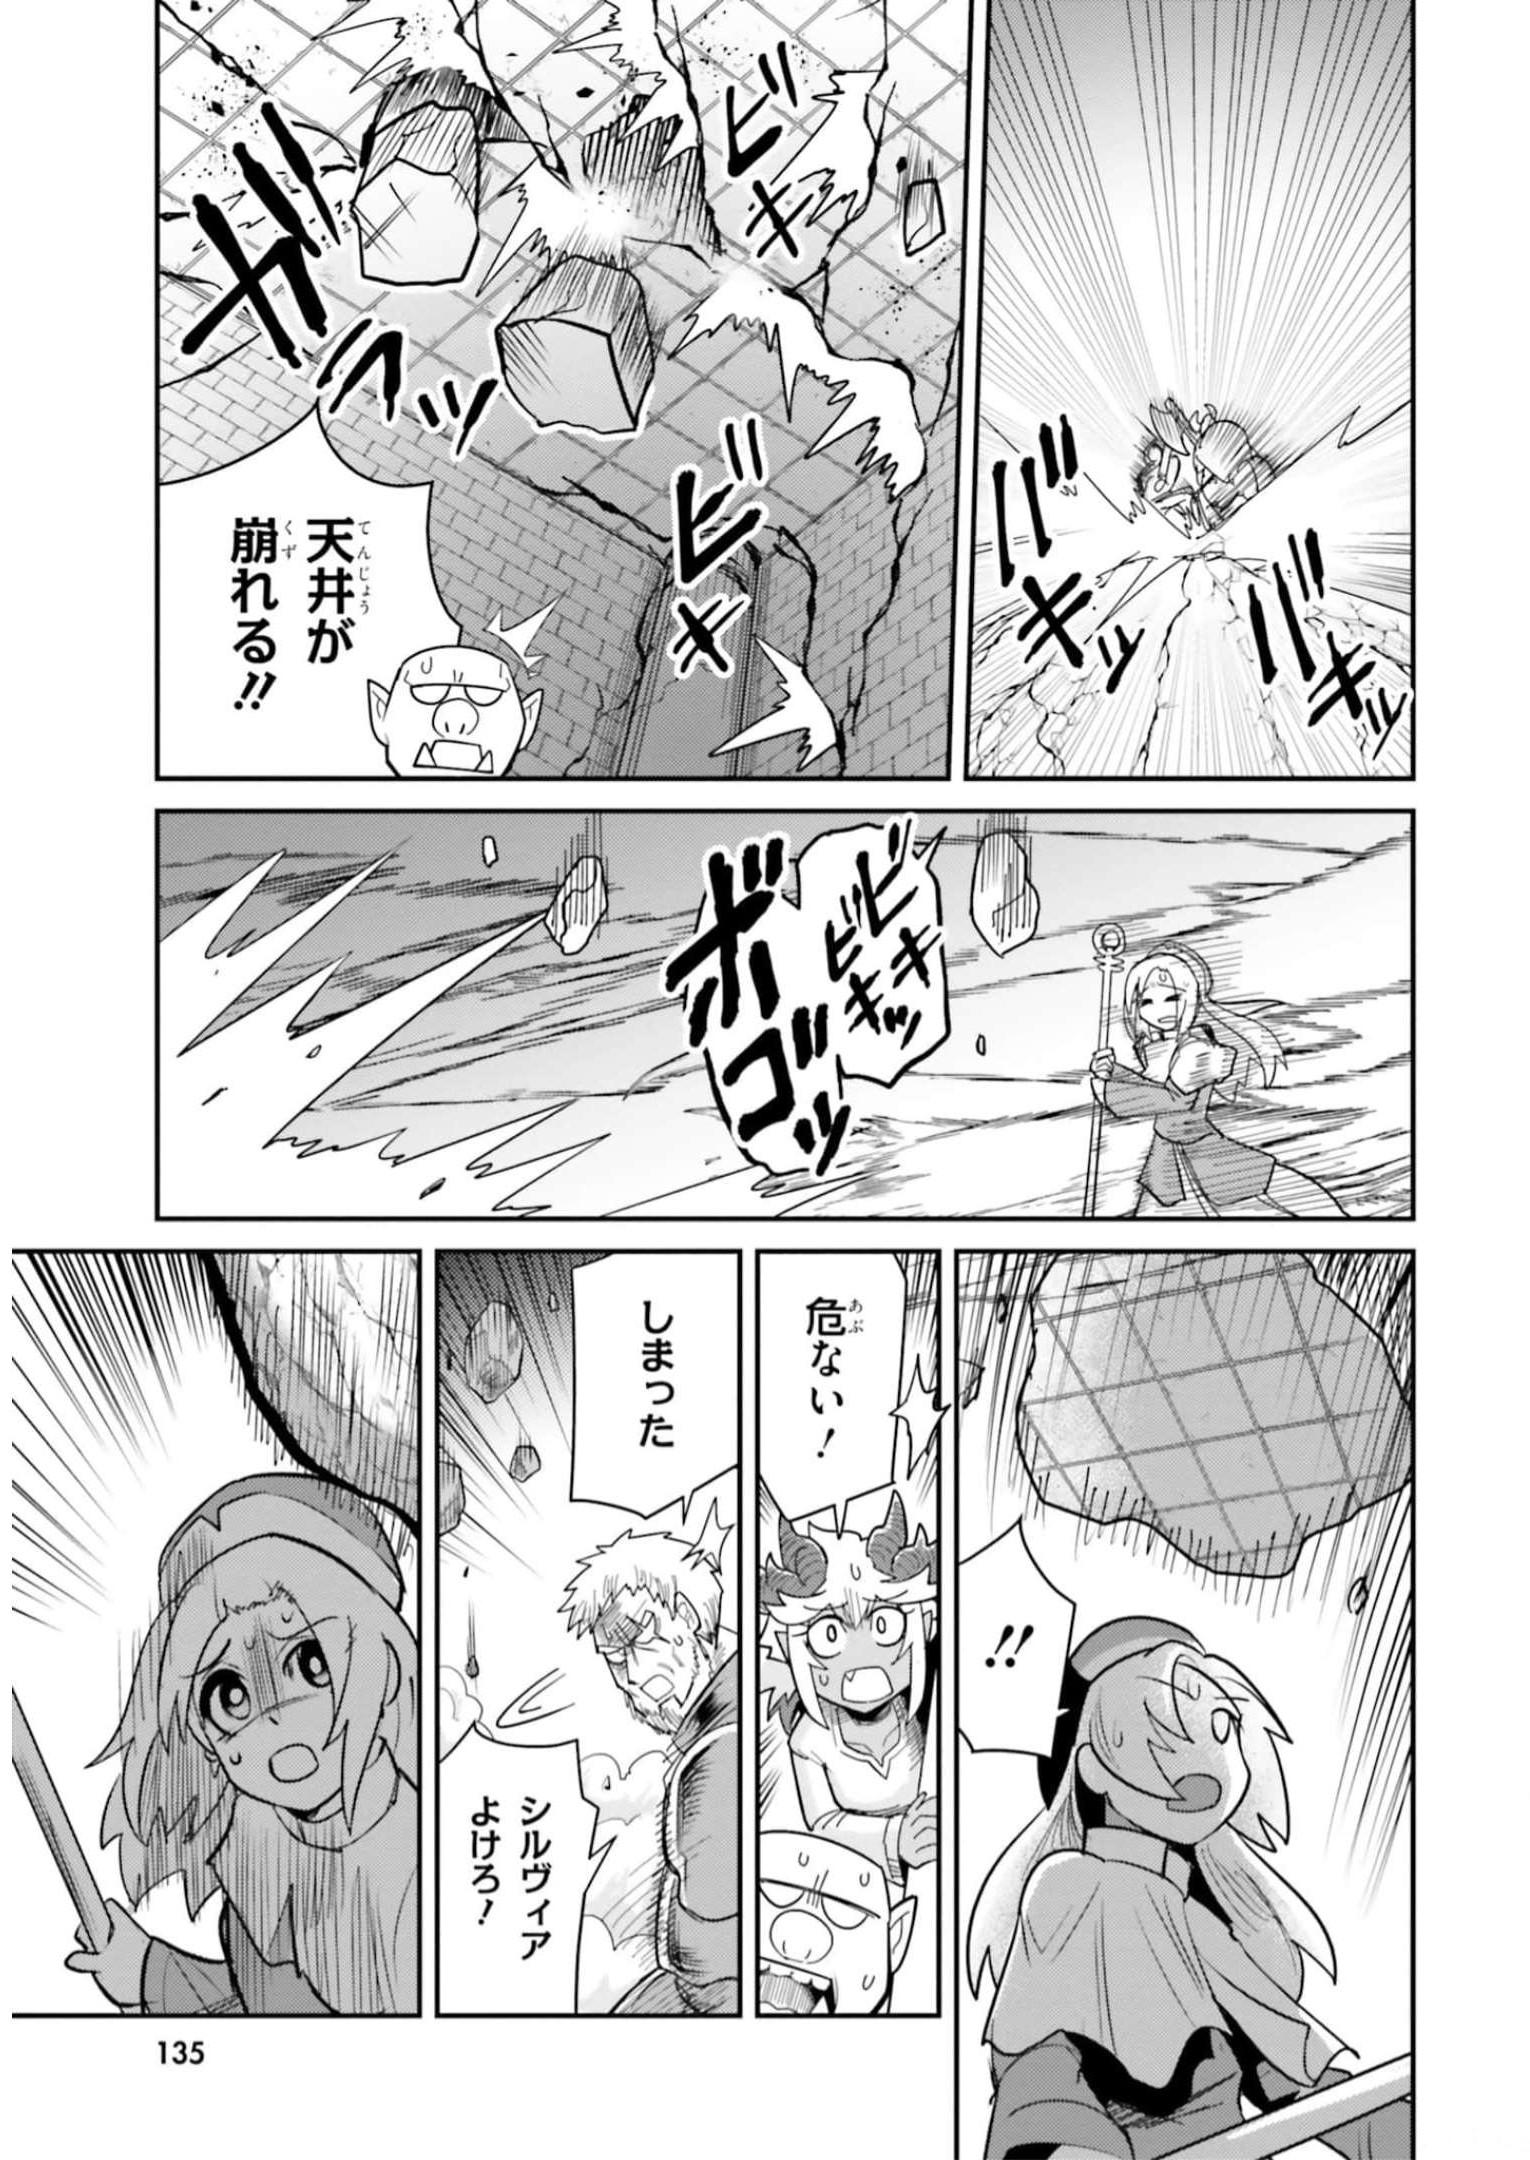 Dungeon no Osananajimi - Chapter 8 - Page 15